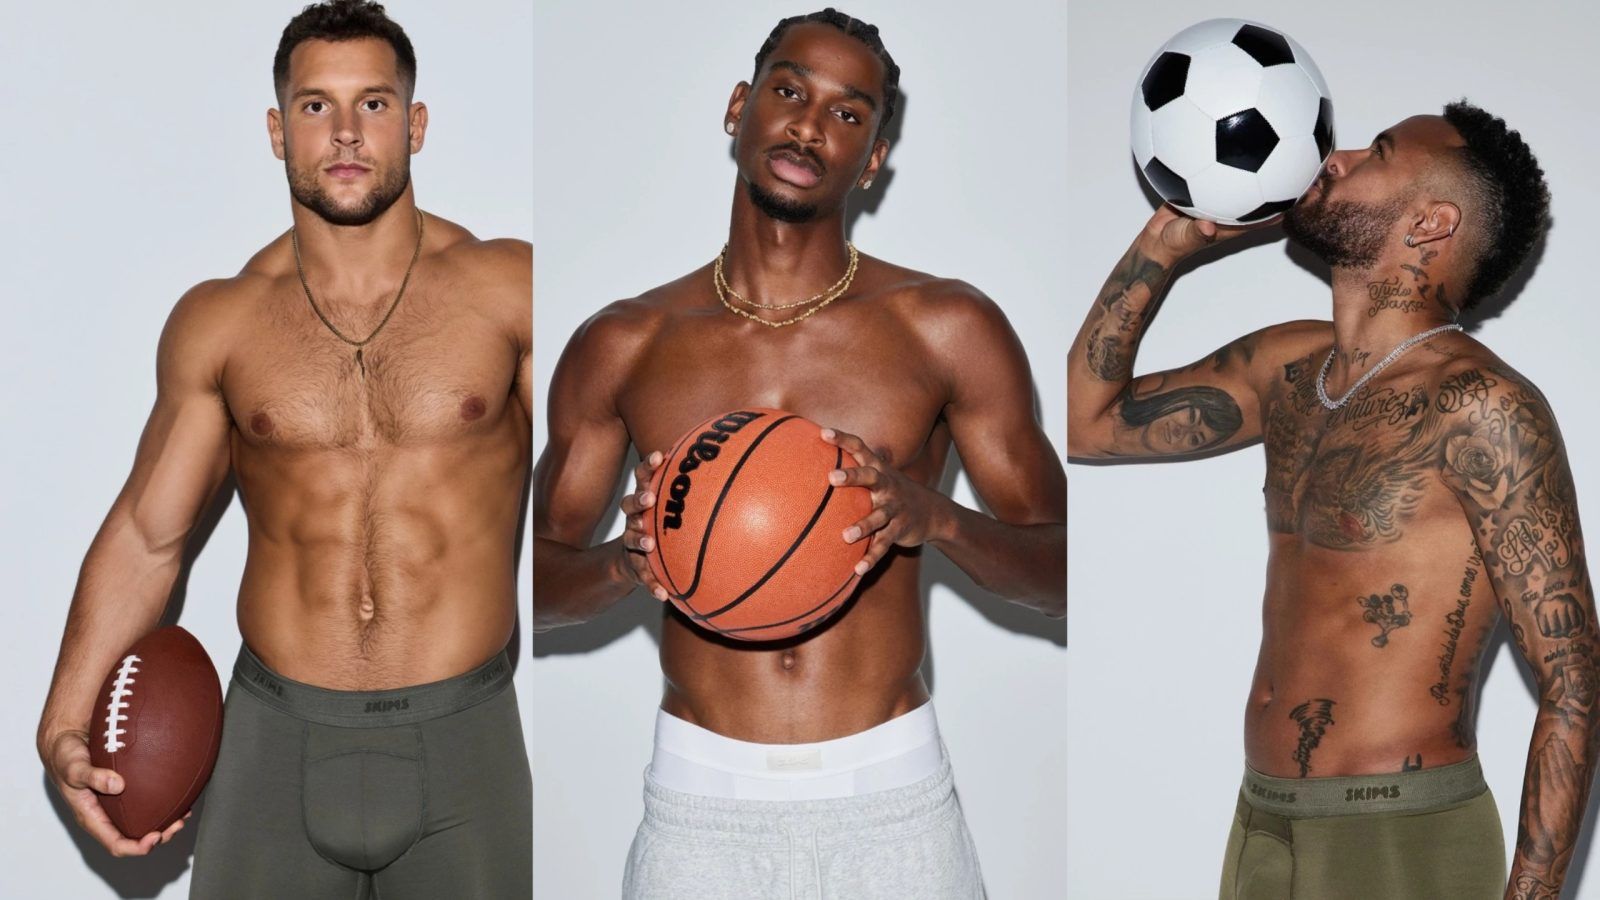 Kim Kardashian's SKIMS debuts menswear line with Neymar and more